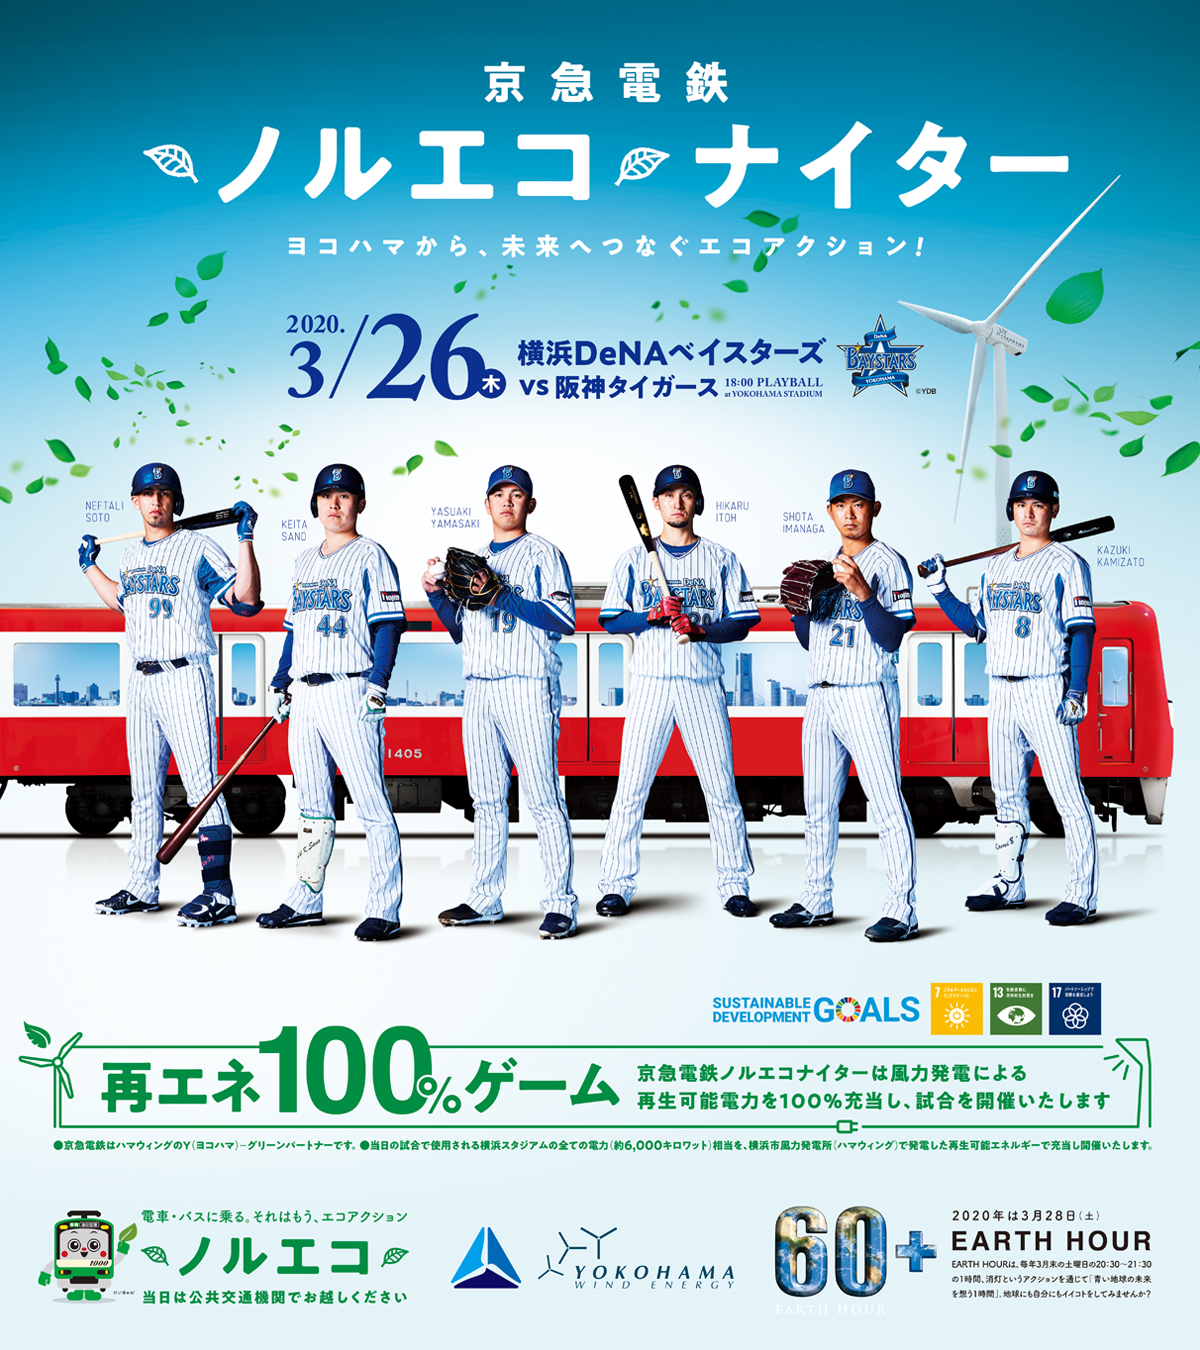 ANAと京急で行こう！ 京急電鉄「ノルエコ」ナイター 羽田国際線大増便キャンペーン